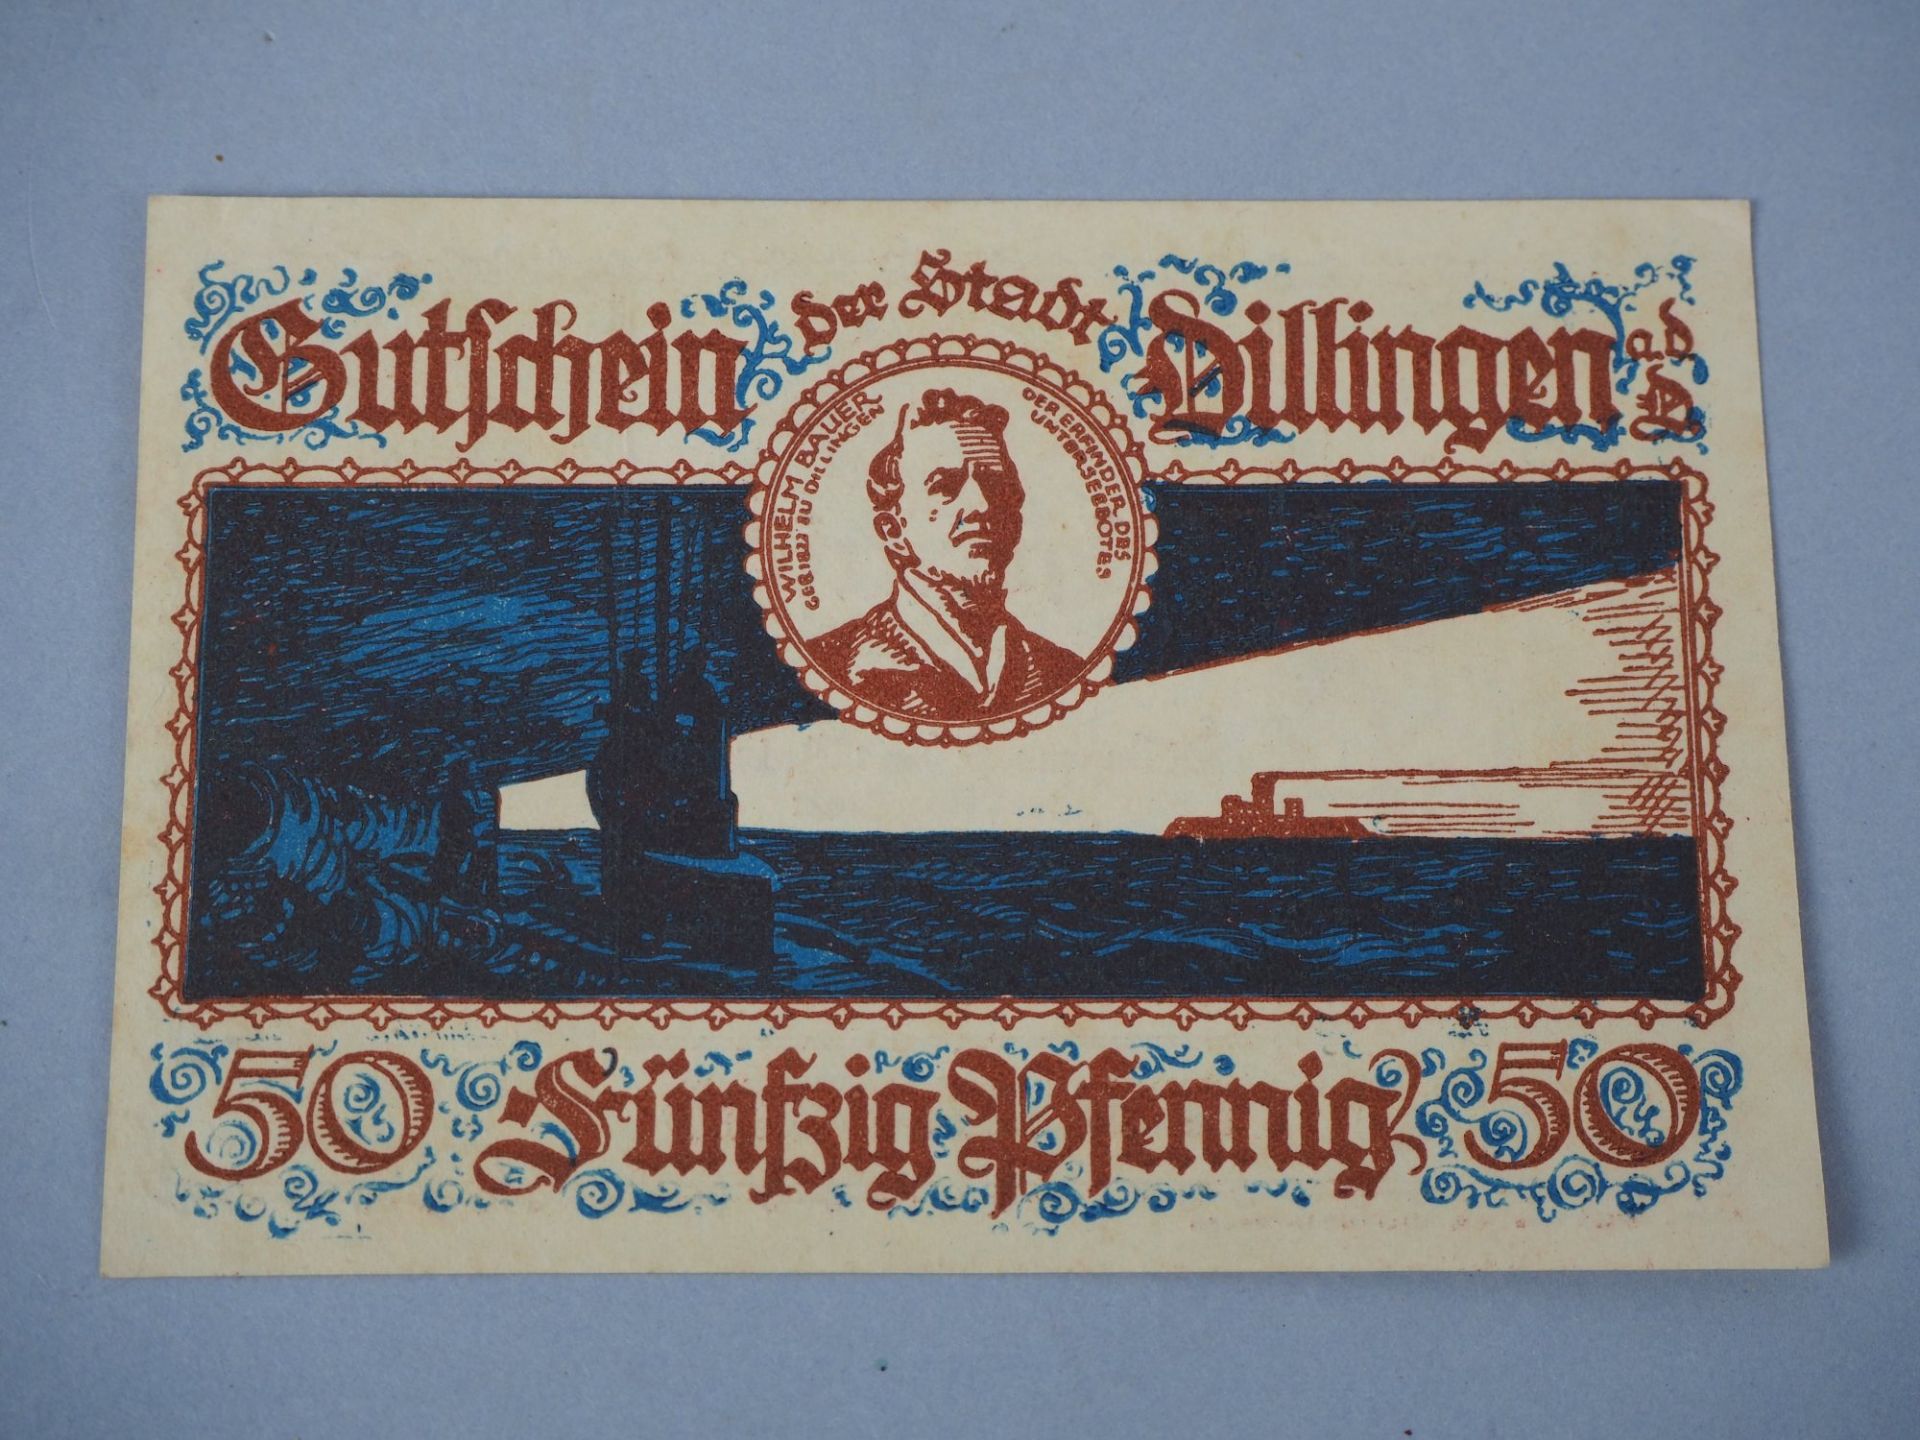 Mixed German inflation money and emergency money bills beginning 20th century. - Image 4 of 6